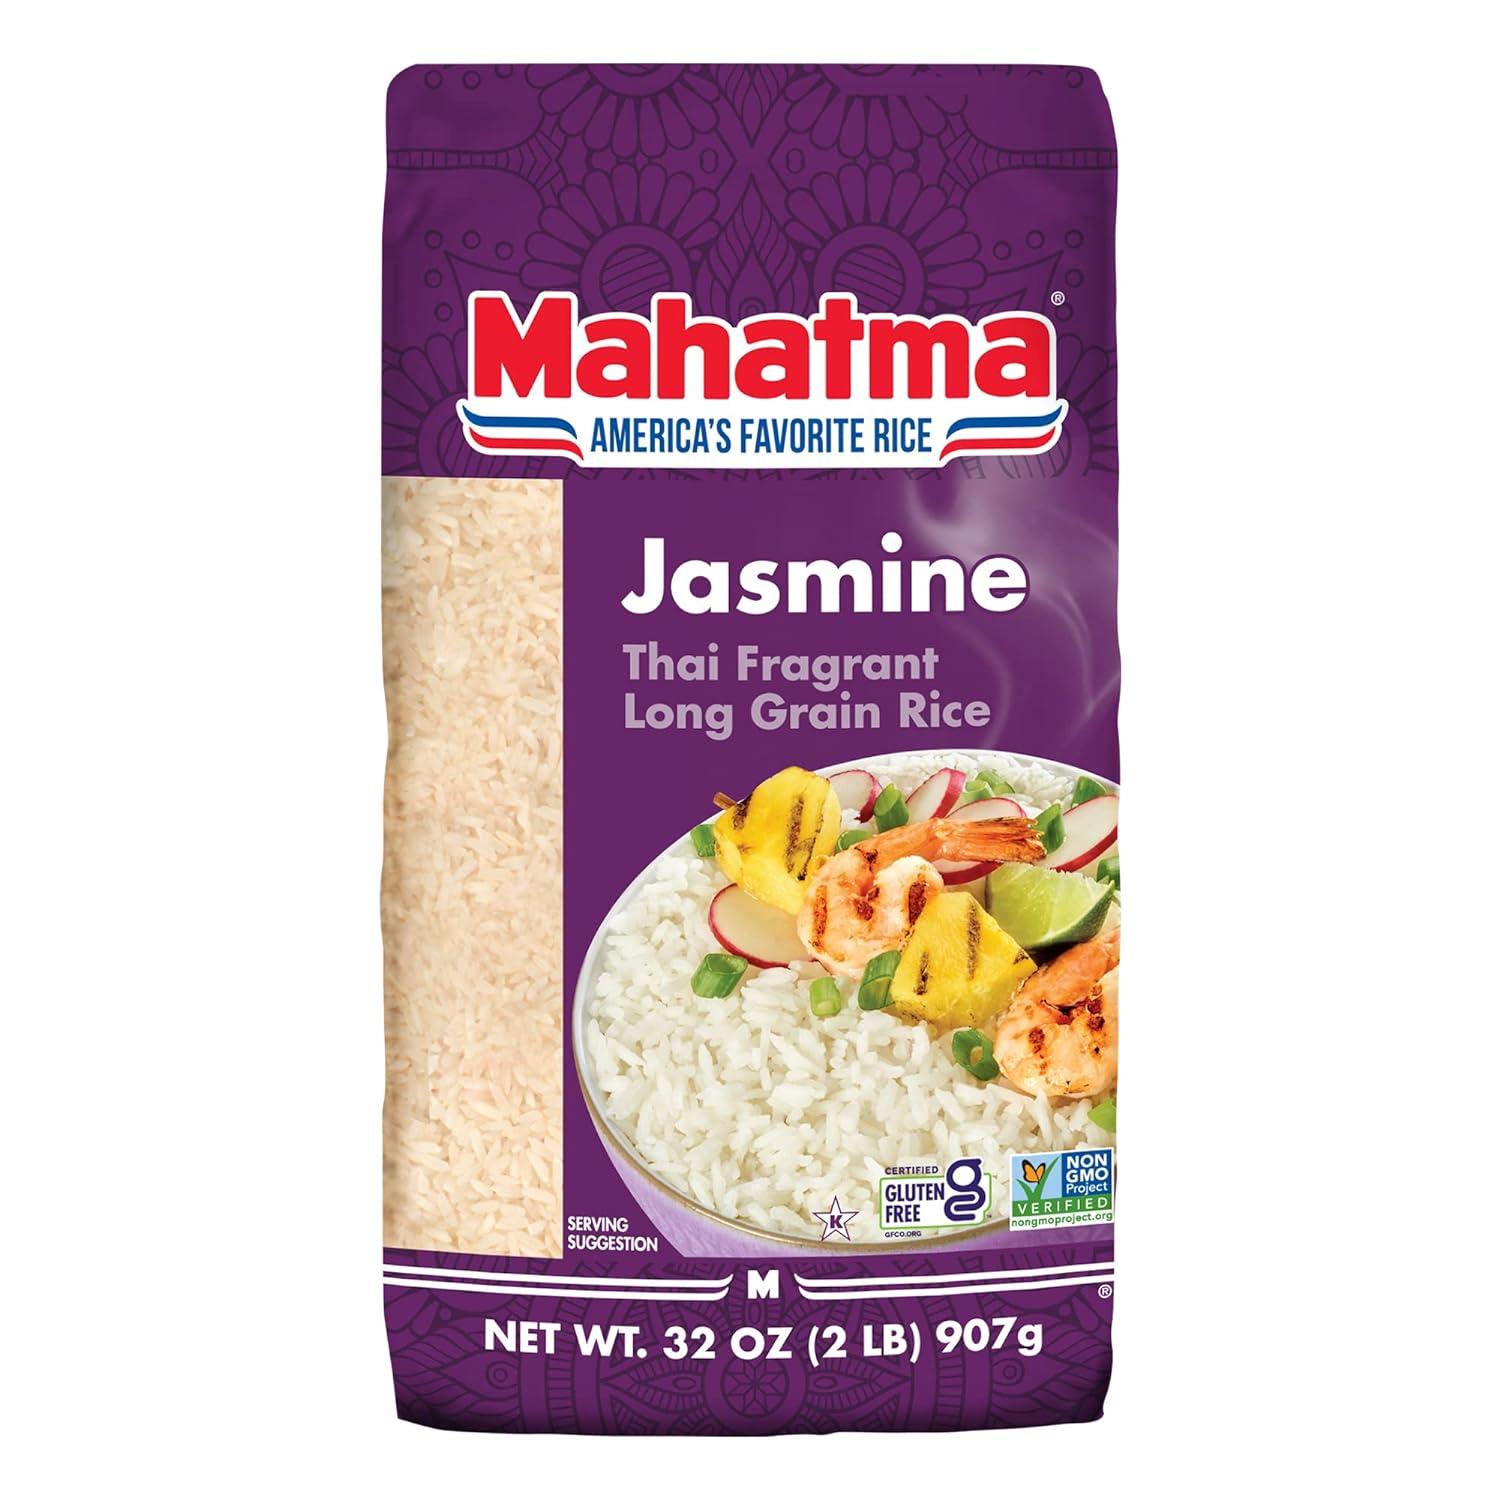 Mahatma Jasmine Rice 32oz Bag for $2.44